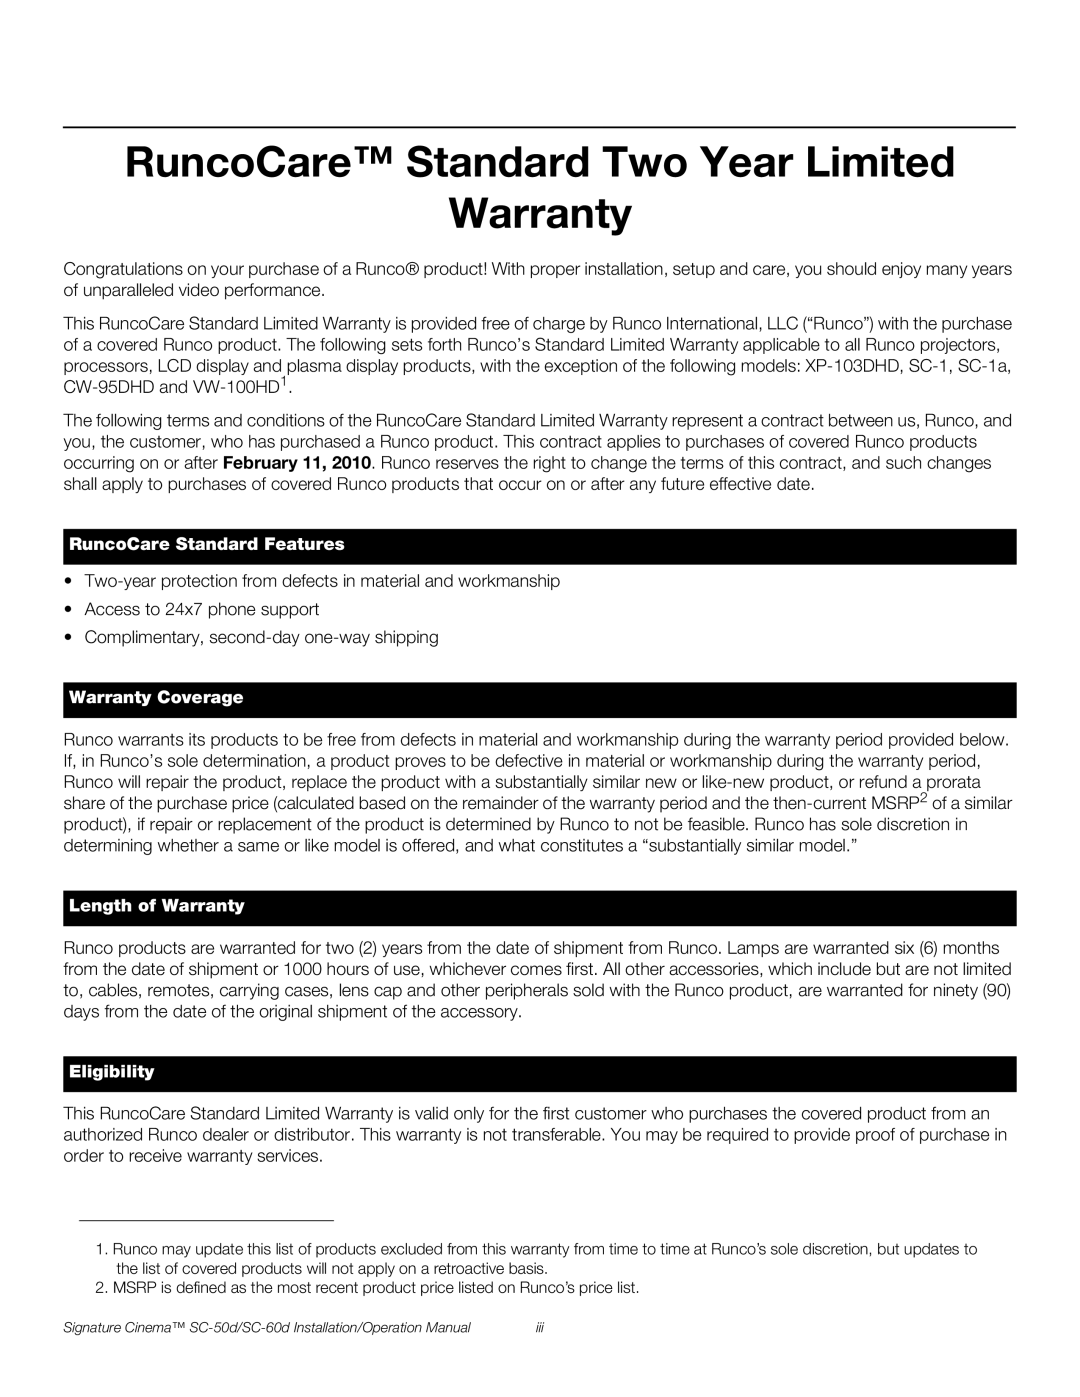 Runco SC-50D RuncoCare Standard Two Year Limited Warranty, RuncoCare Standard Features, Warranty Coverage, Eligibility 